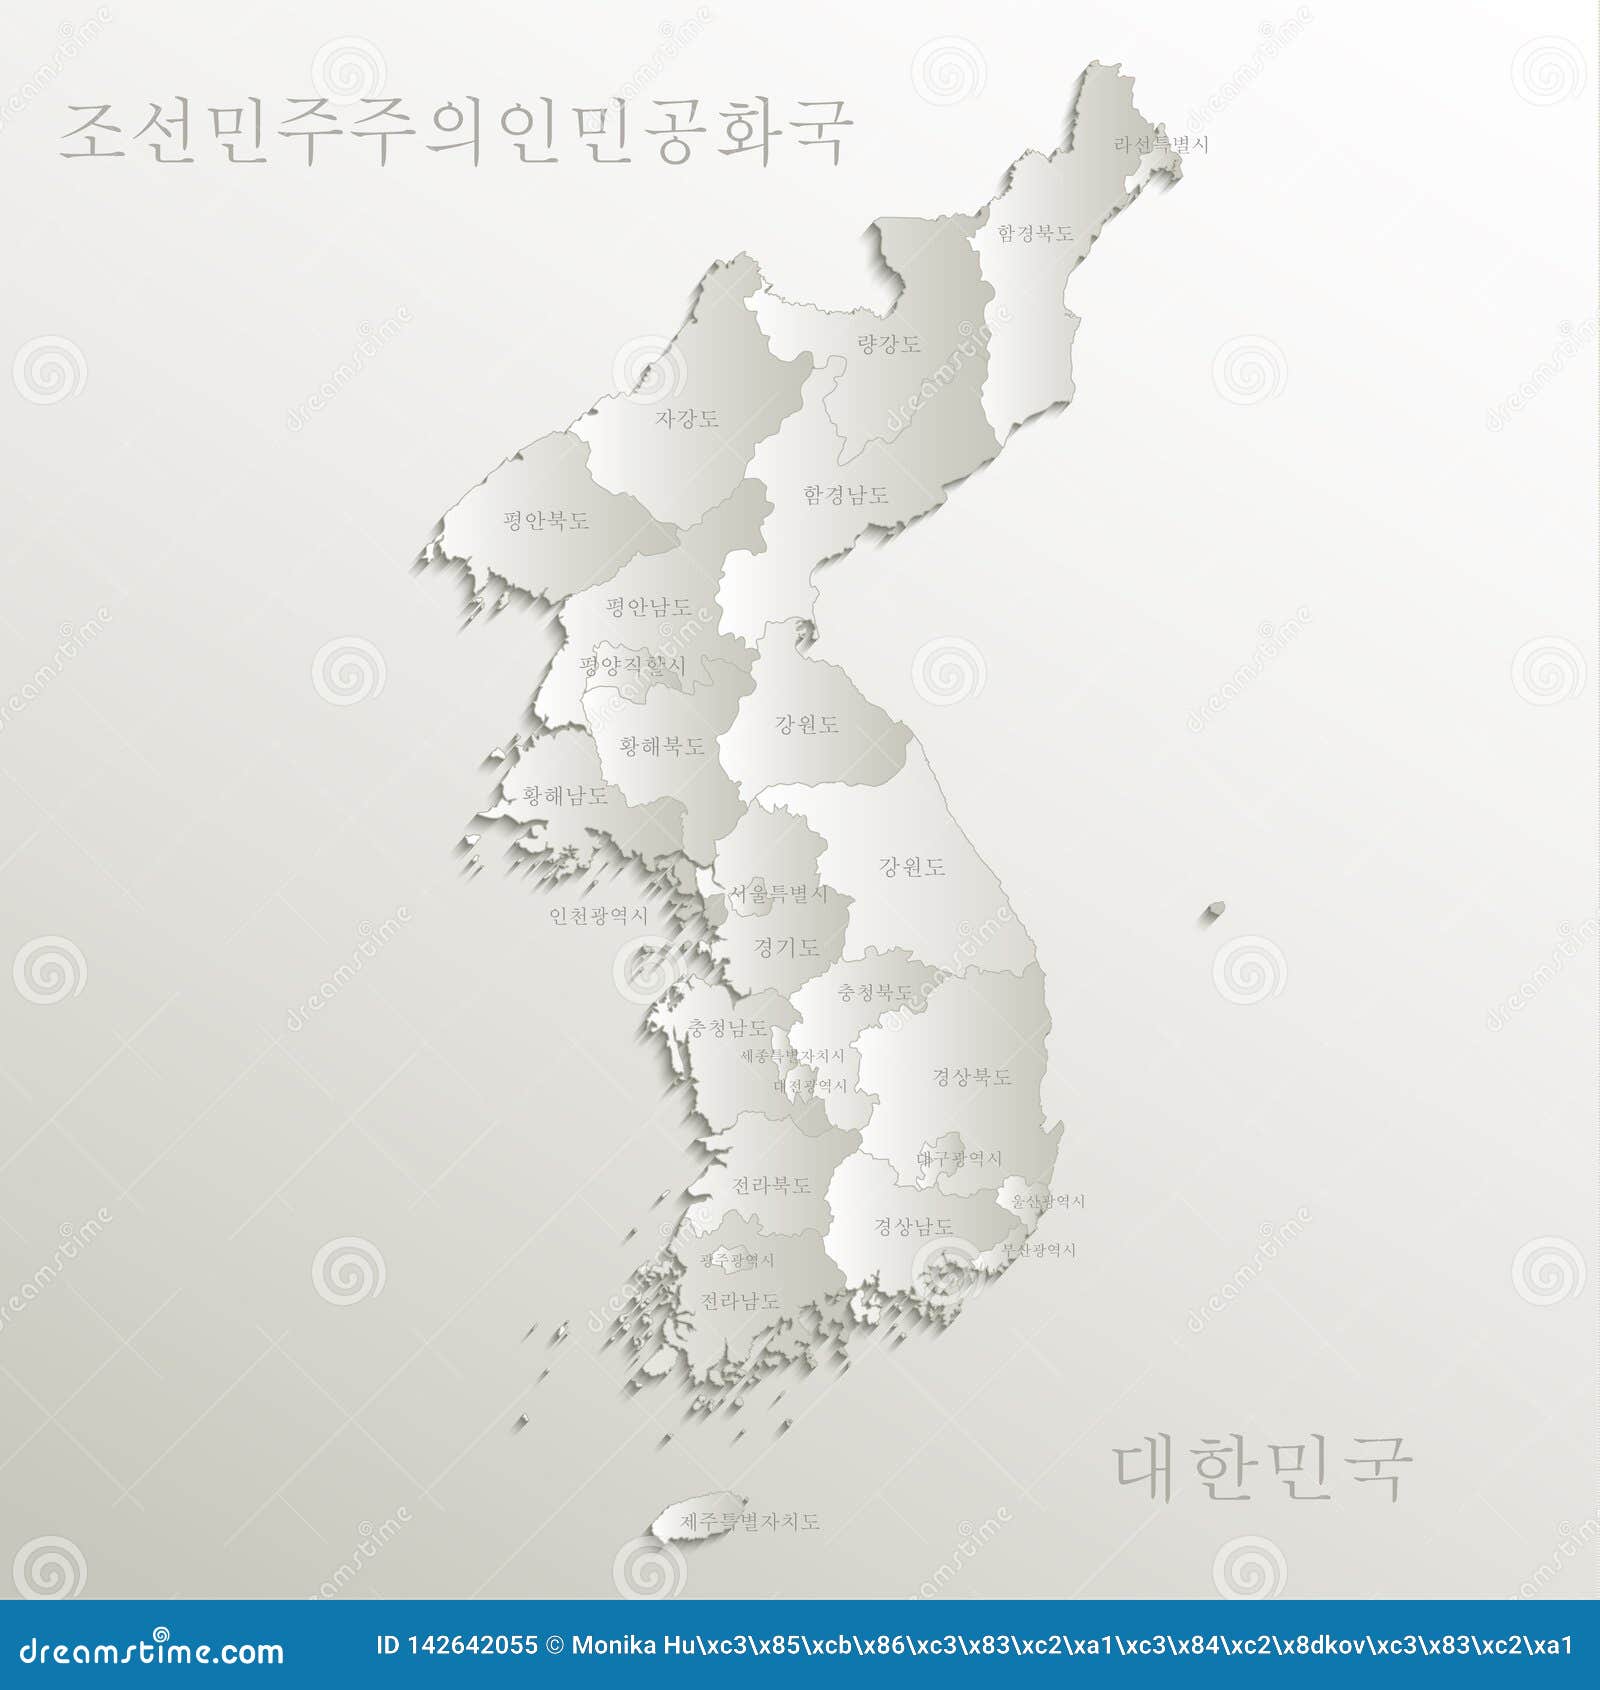 north and south korea map separate region, korean names hangul font, paper card 3d natural